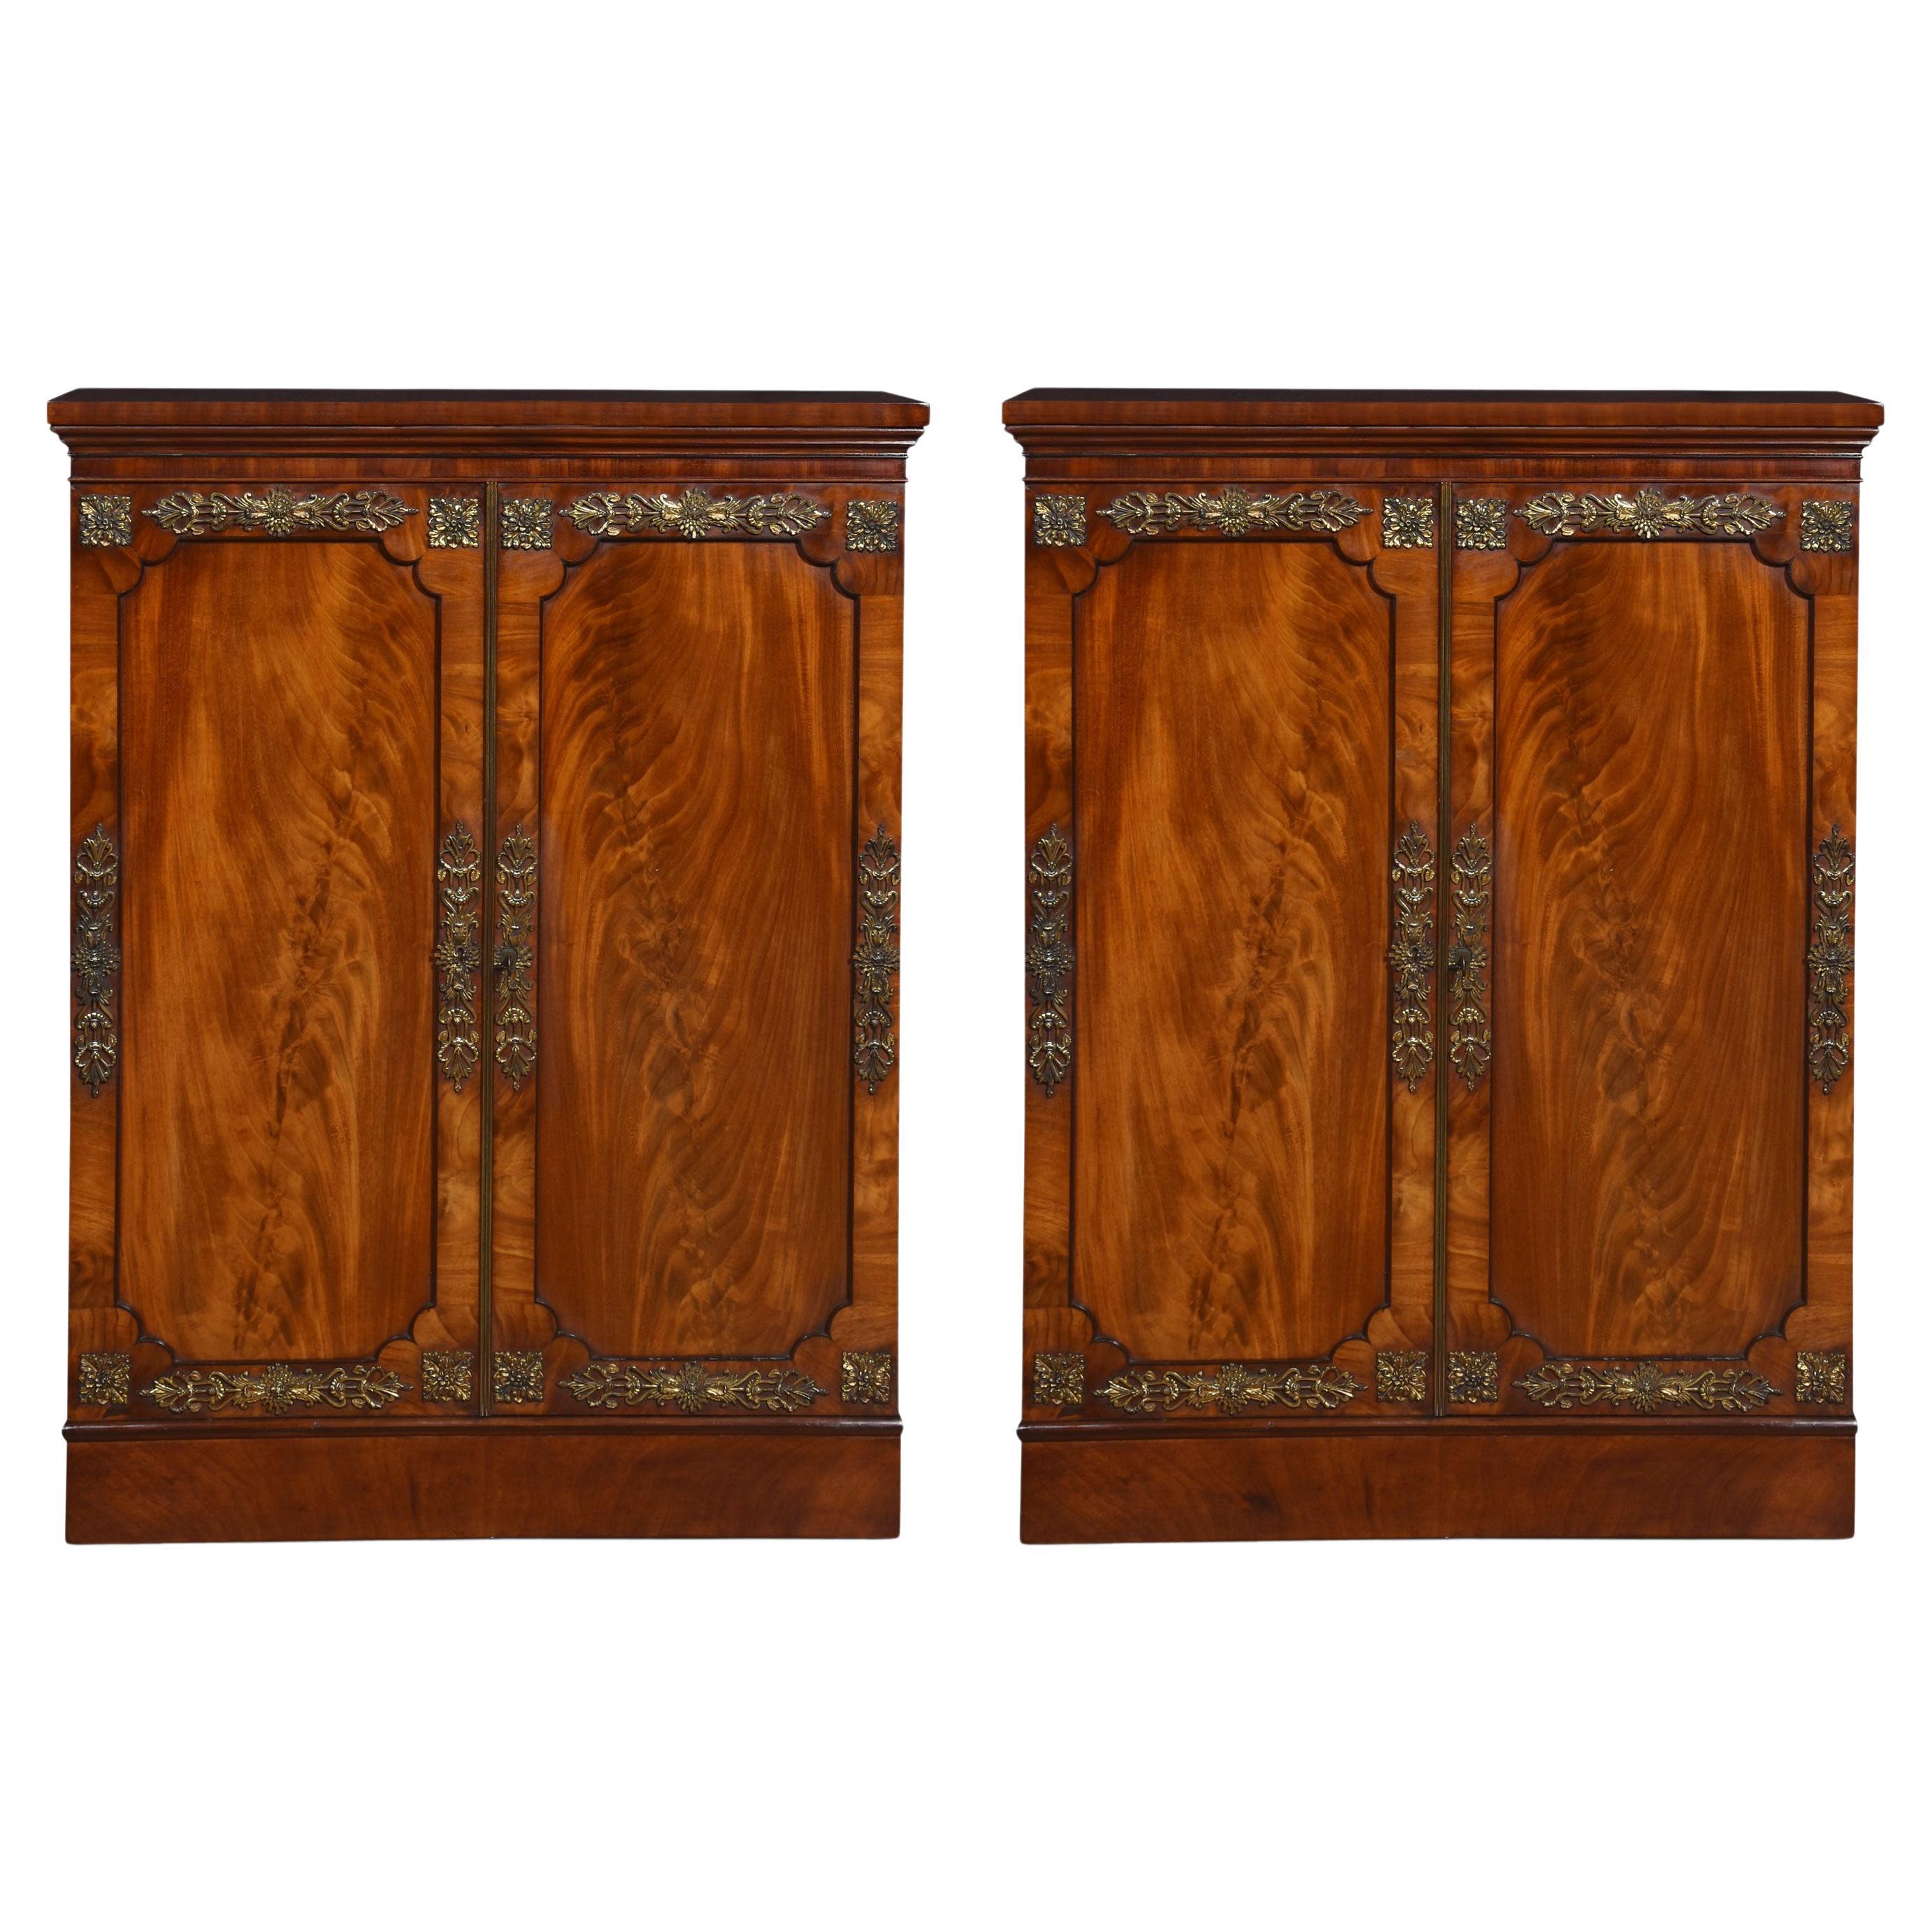 Pair of figured mahogany cabinet